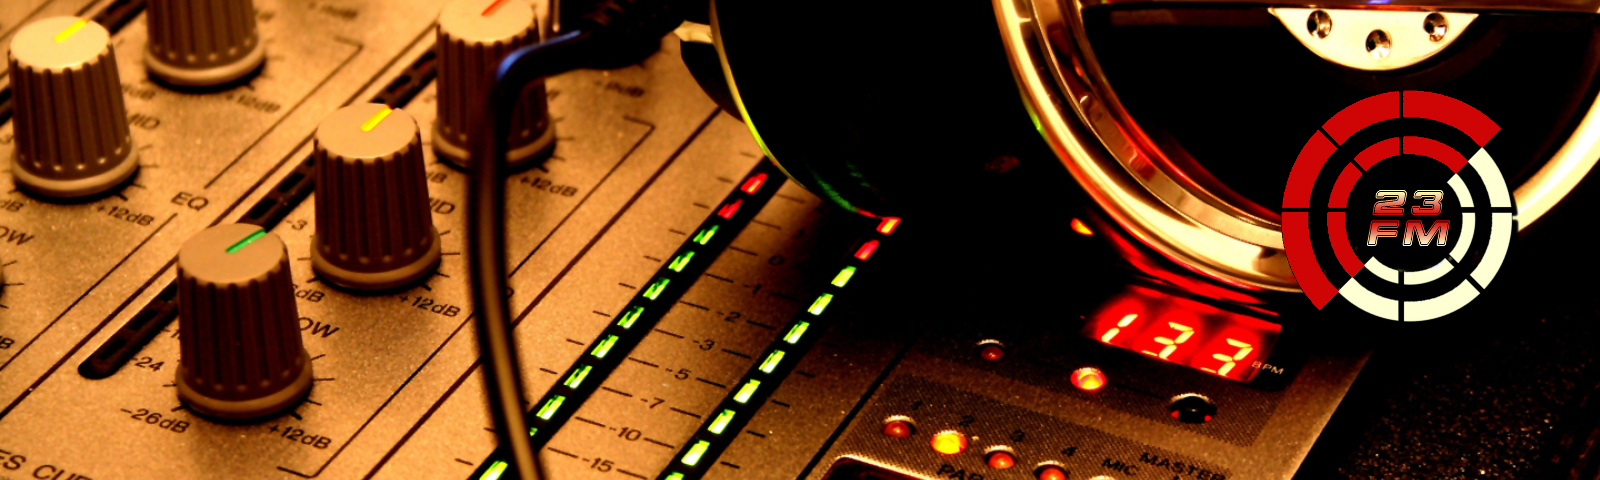 23FM - High End Technology